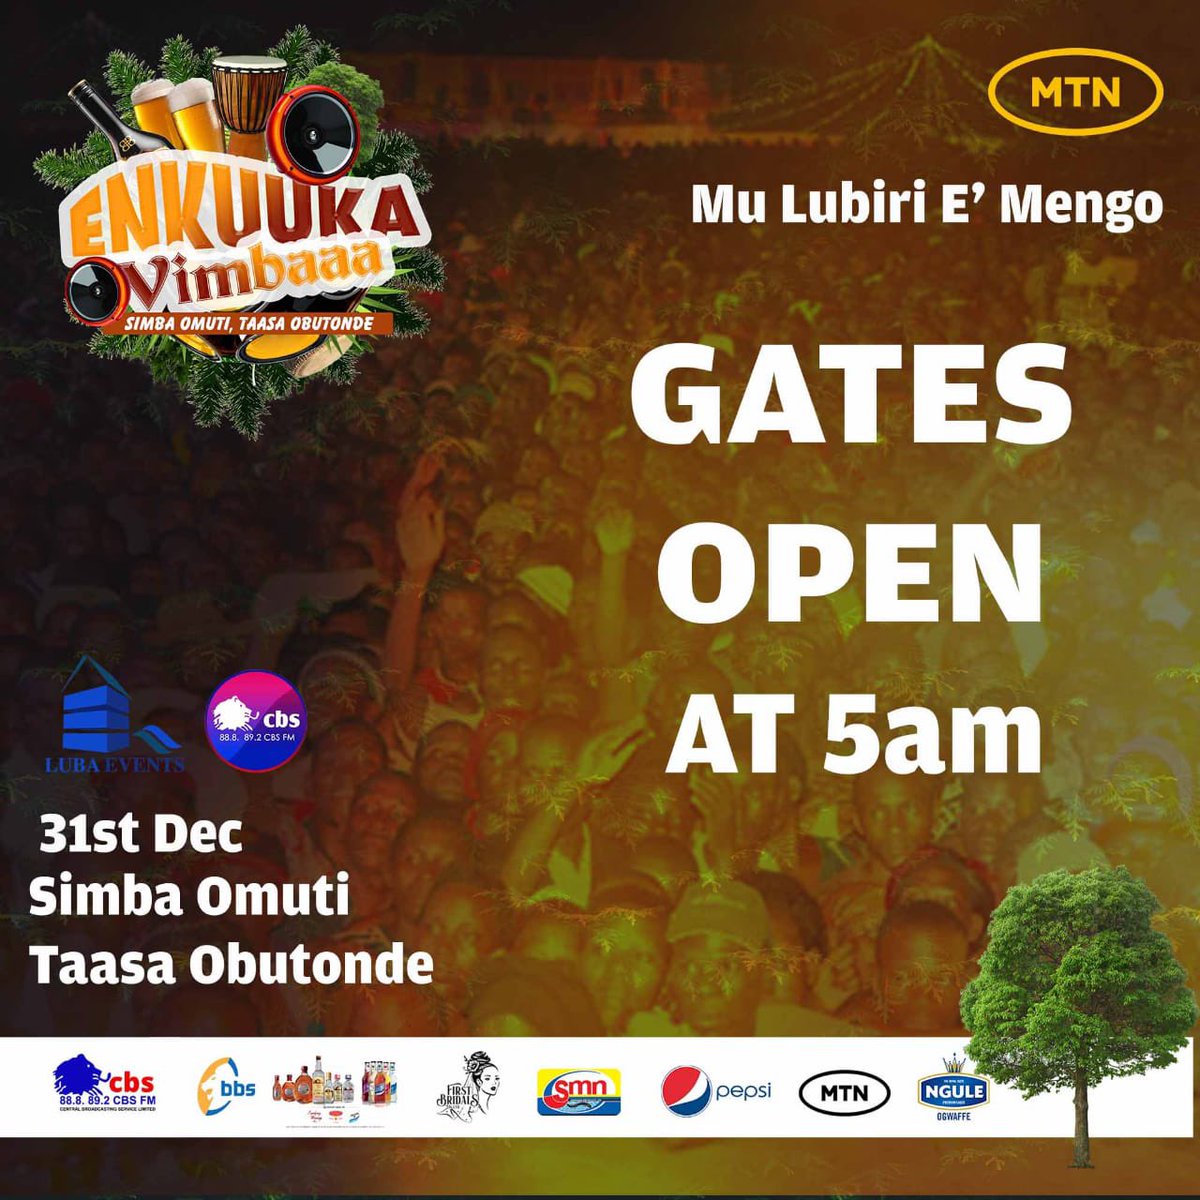 Gates open at 5am for the #EnkuumaVimba , are you ready #SimbaOmuti  

We meet in Lubiri e Mengo